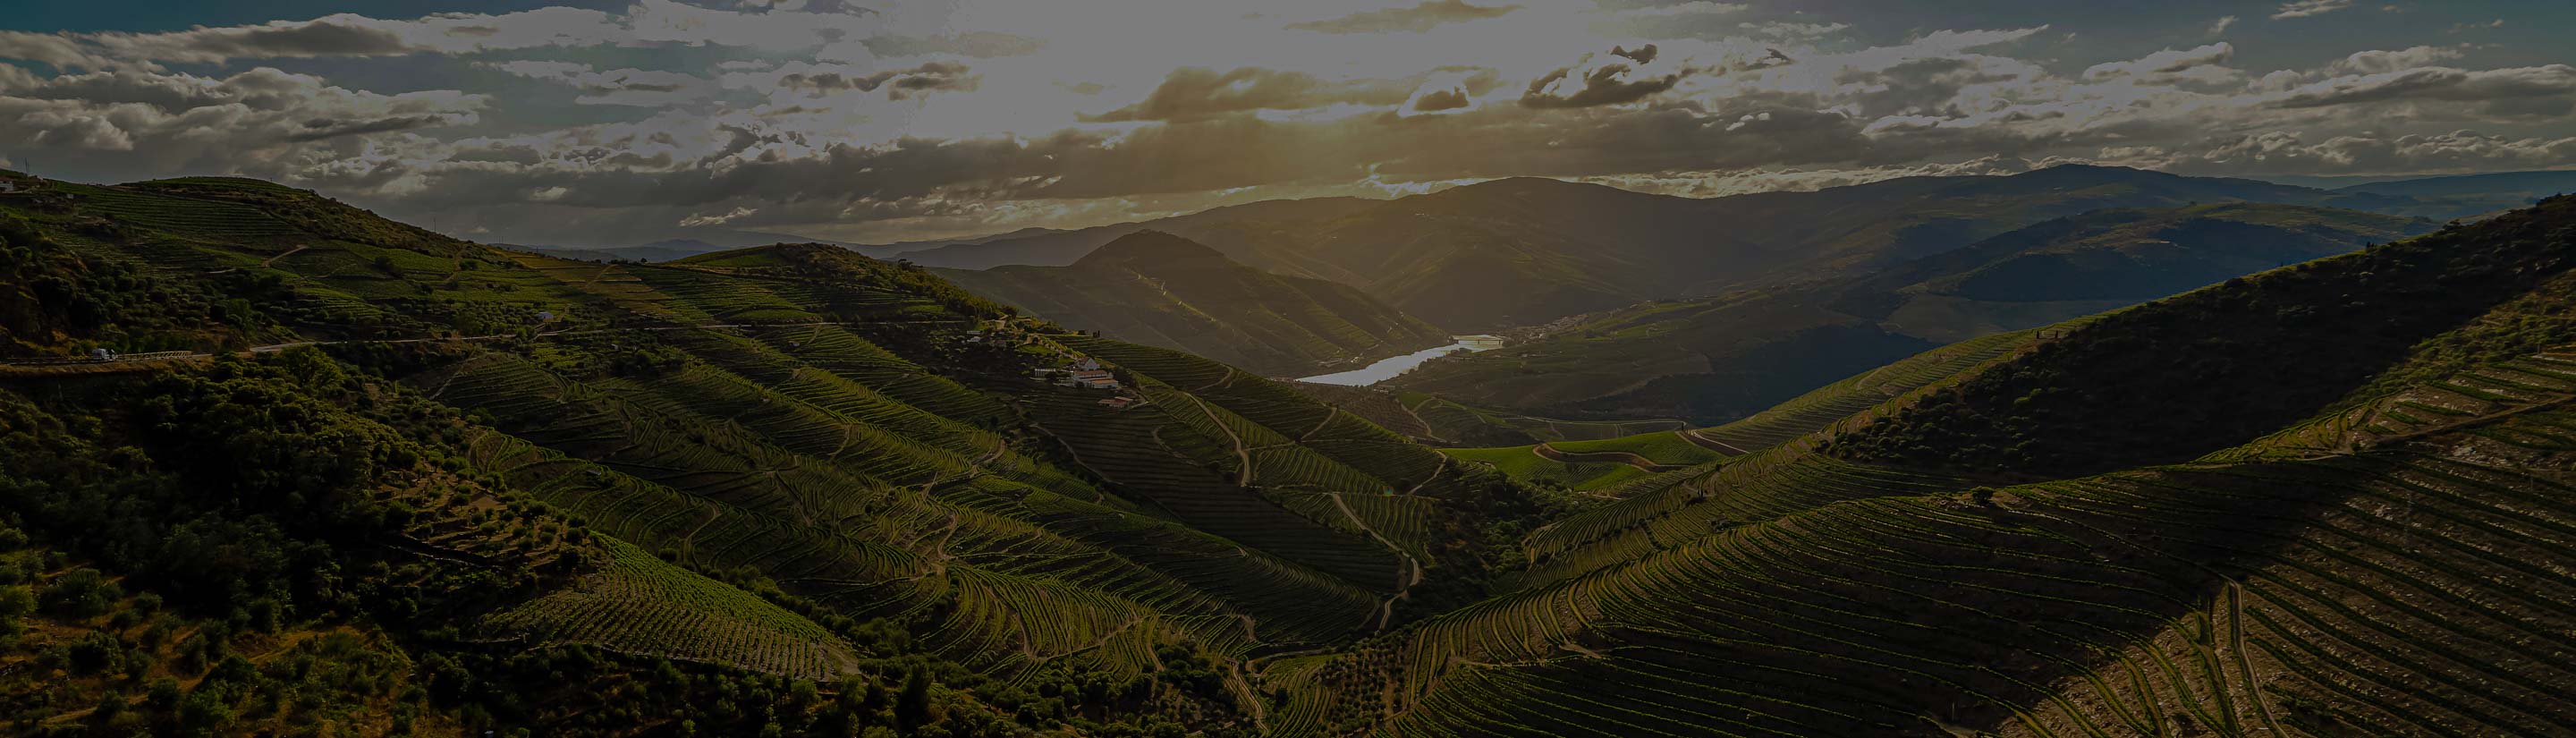 Portugal grüne Hügel Douro Tal